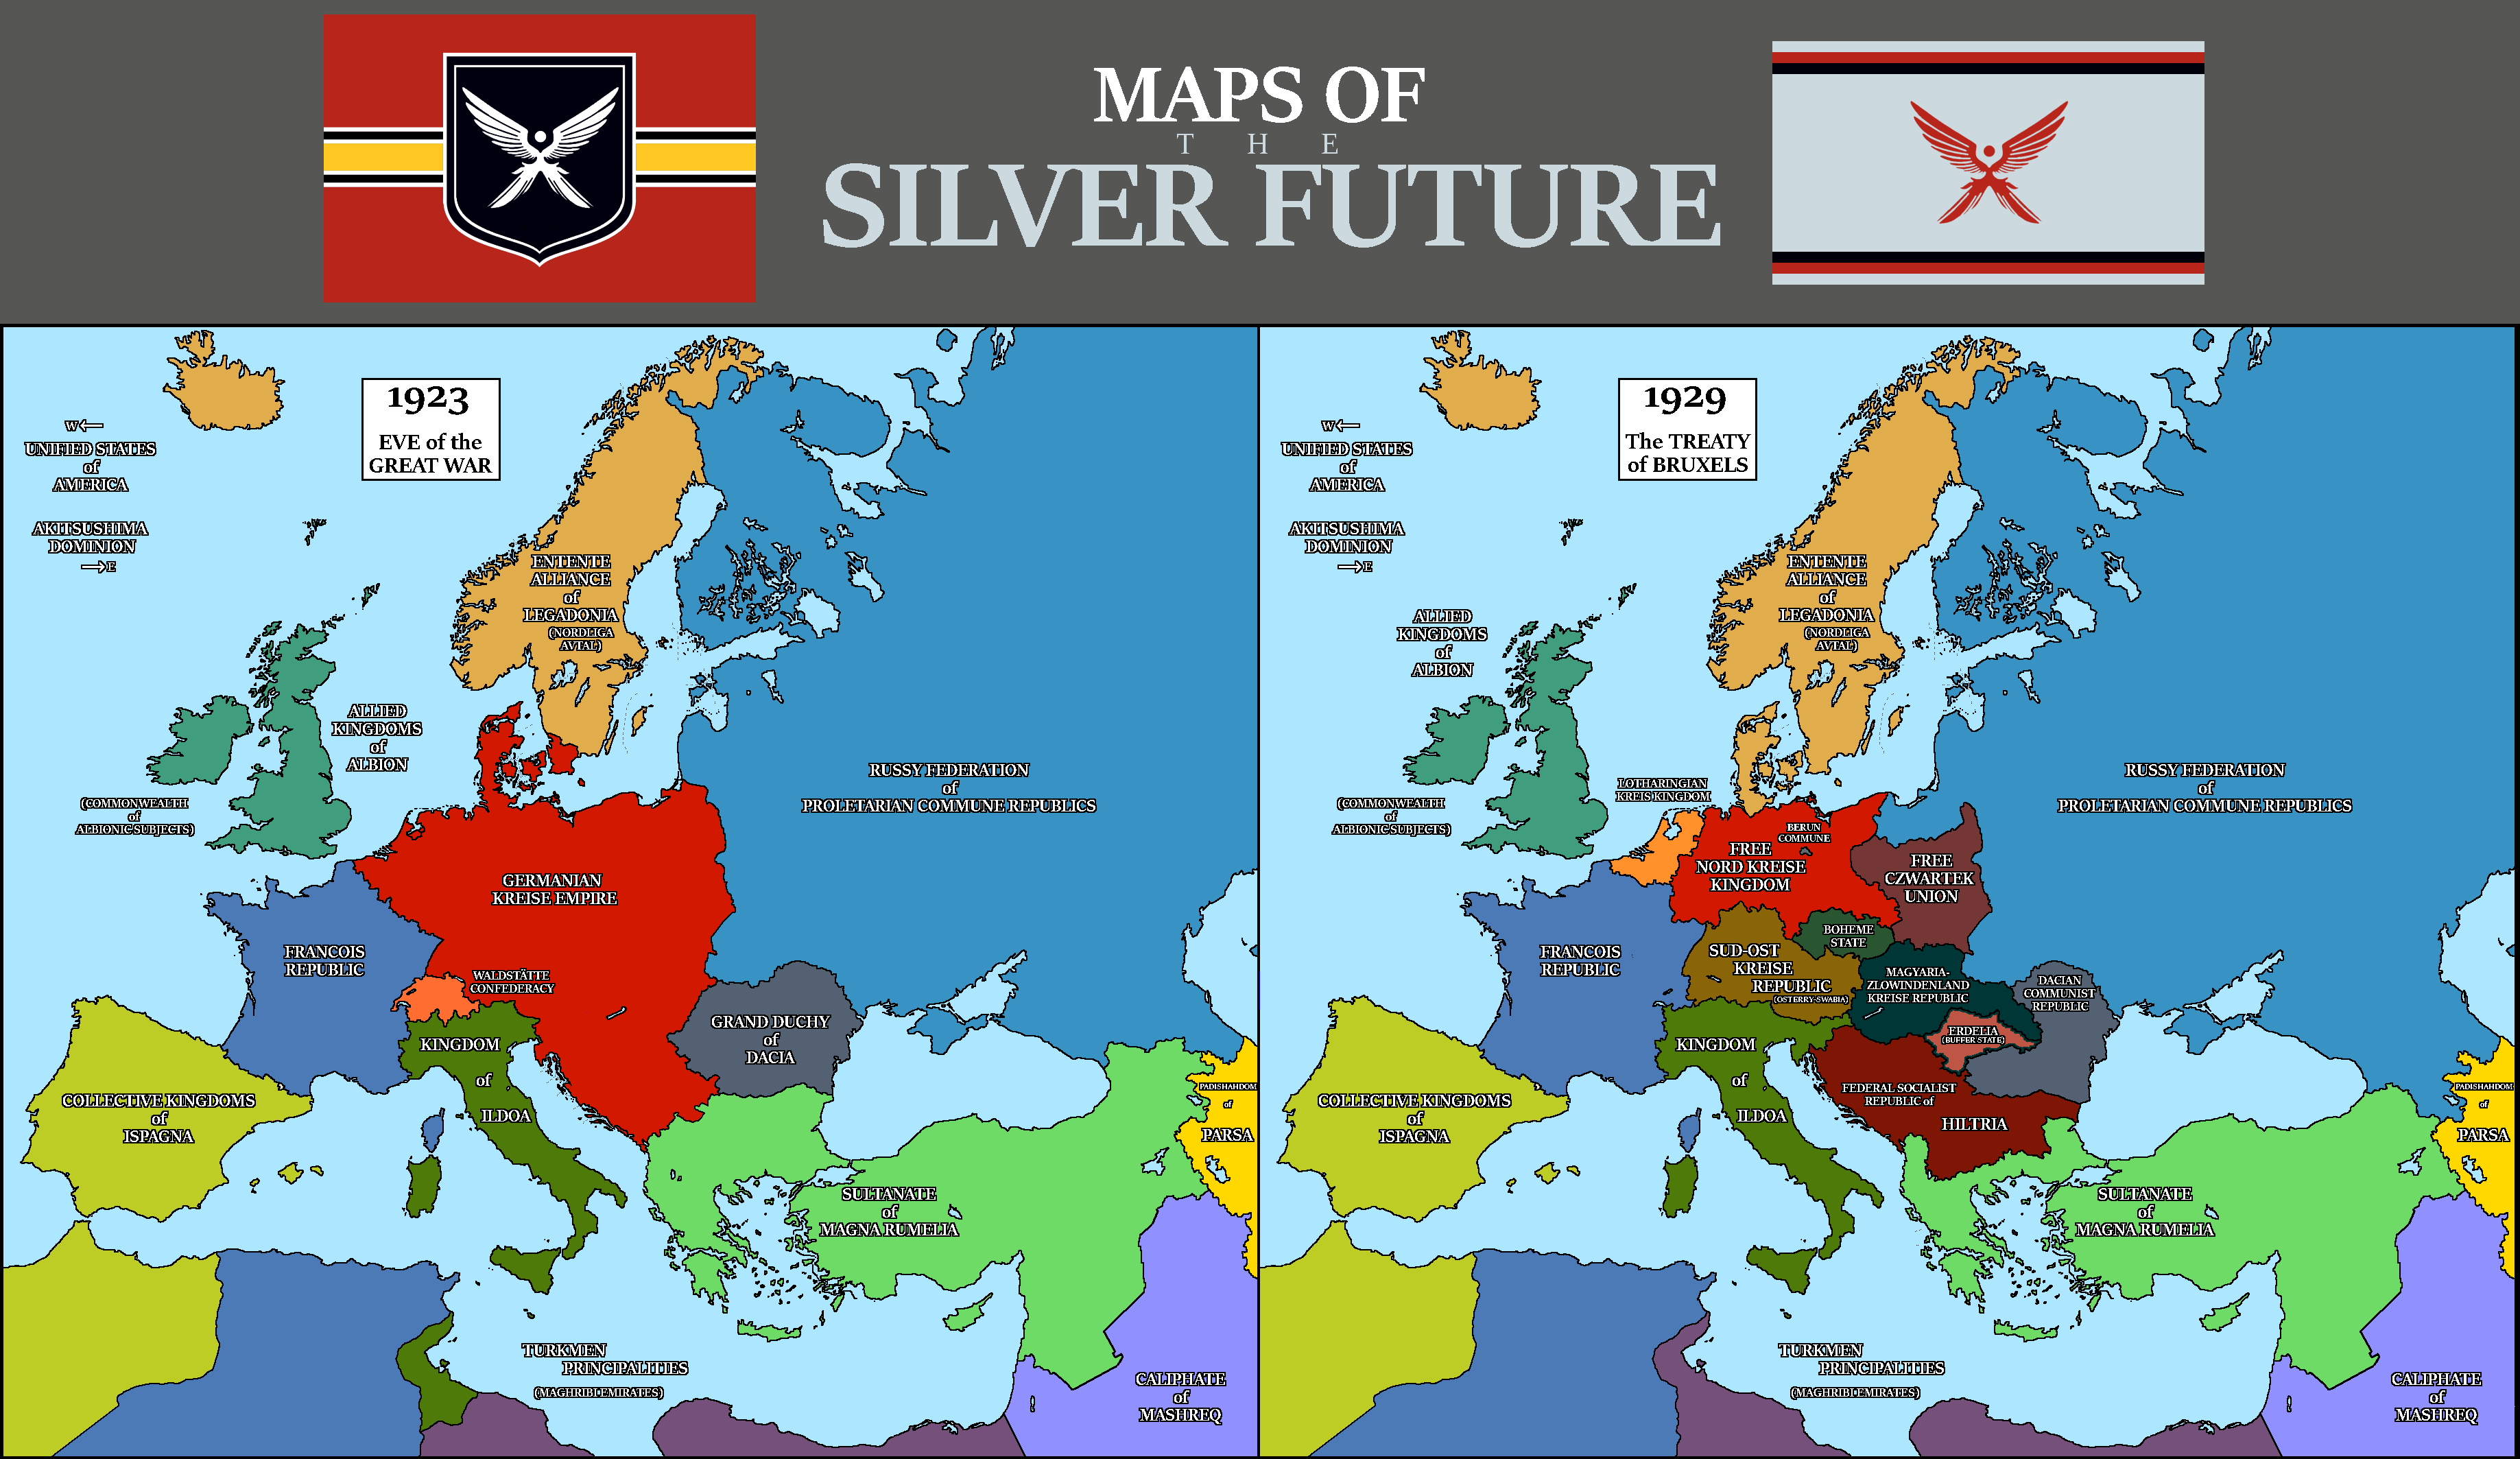 https://www.alternatehistory.com/forum/attachments/silverfuture_maps1-png.610521/